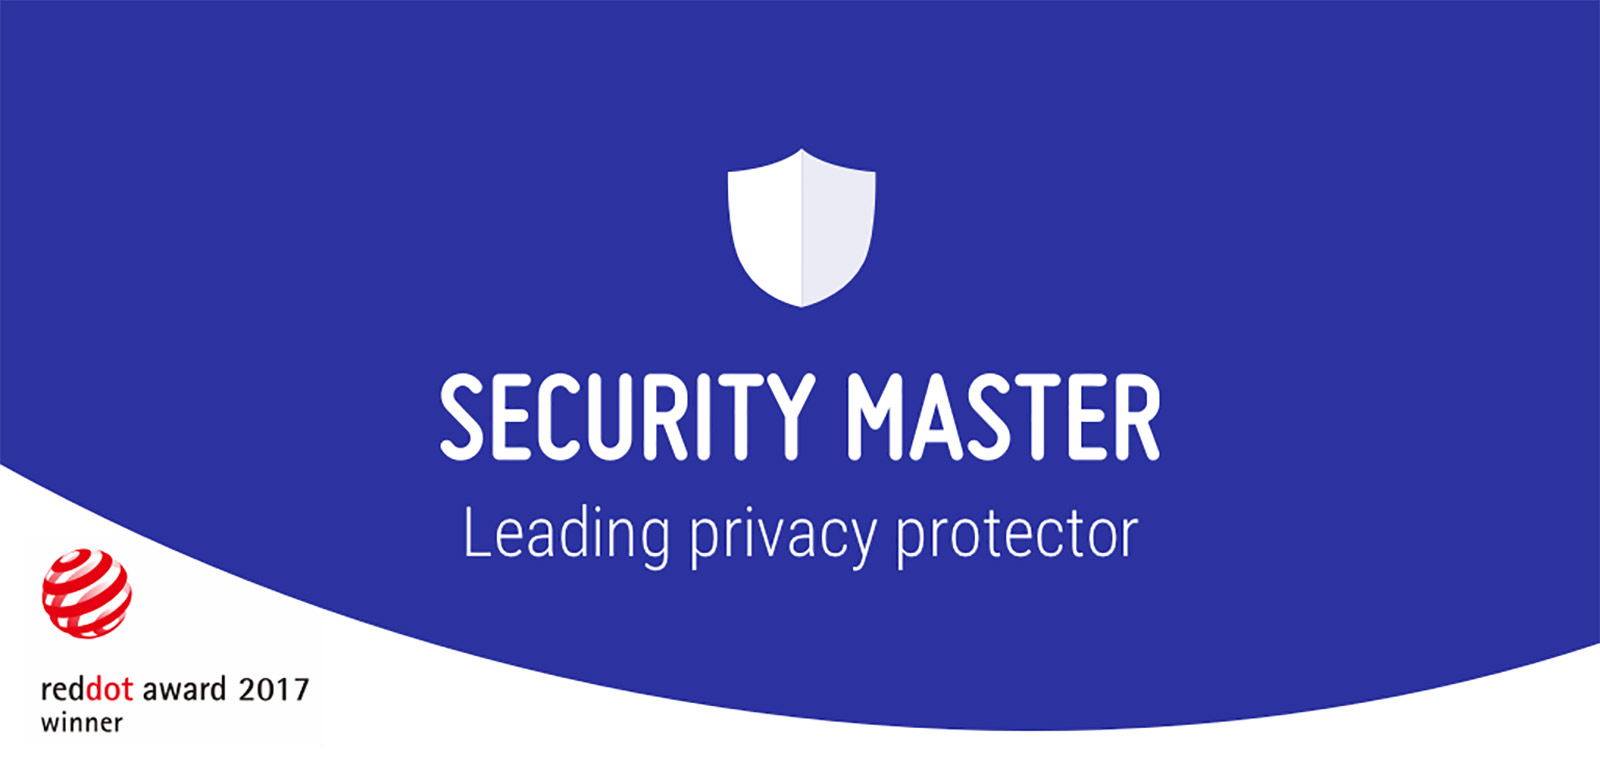 Mobile Security Master Mod Apk 5.1.8 (Premium Unlocked)